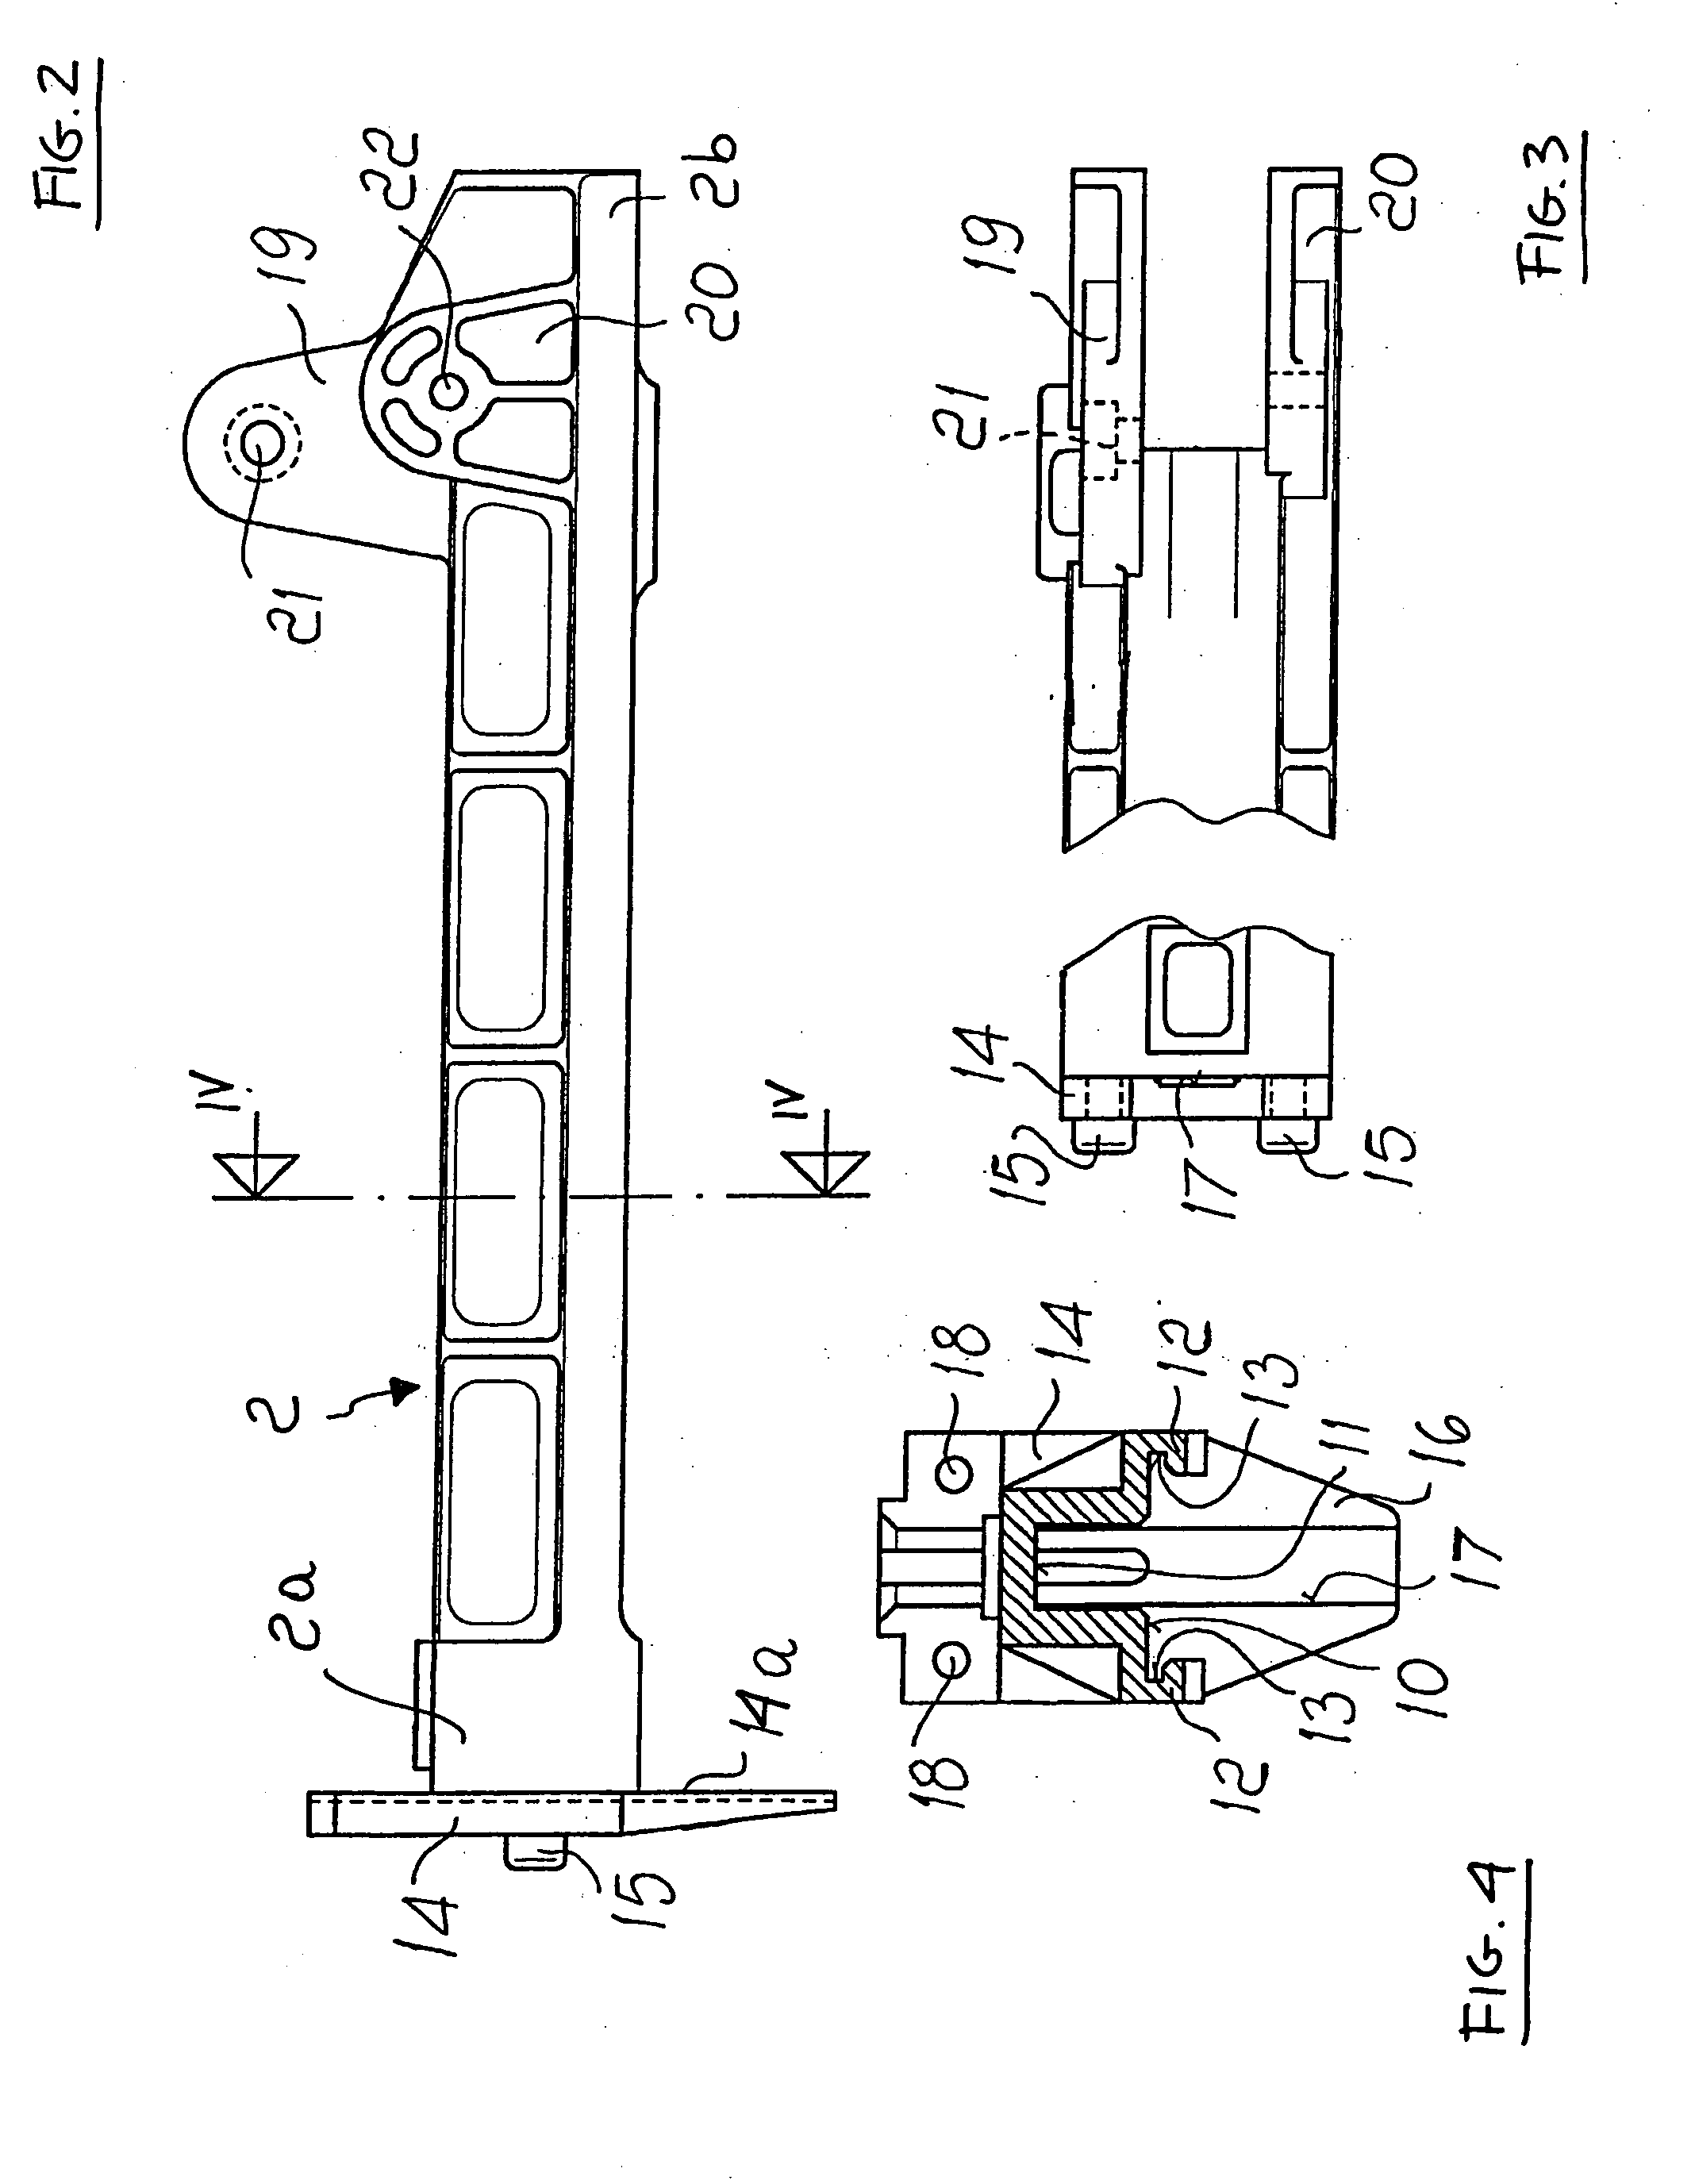 Modular magazine of fixing element for pneumatic gun